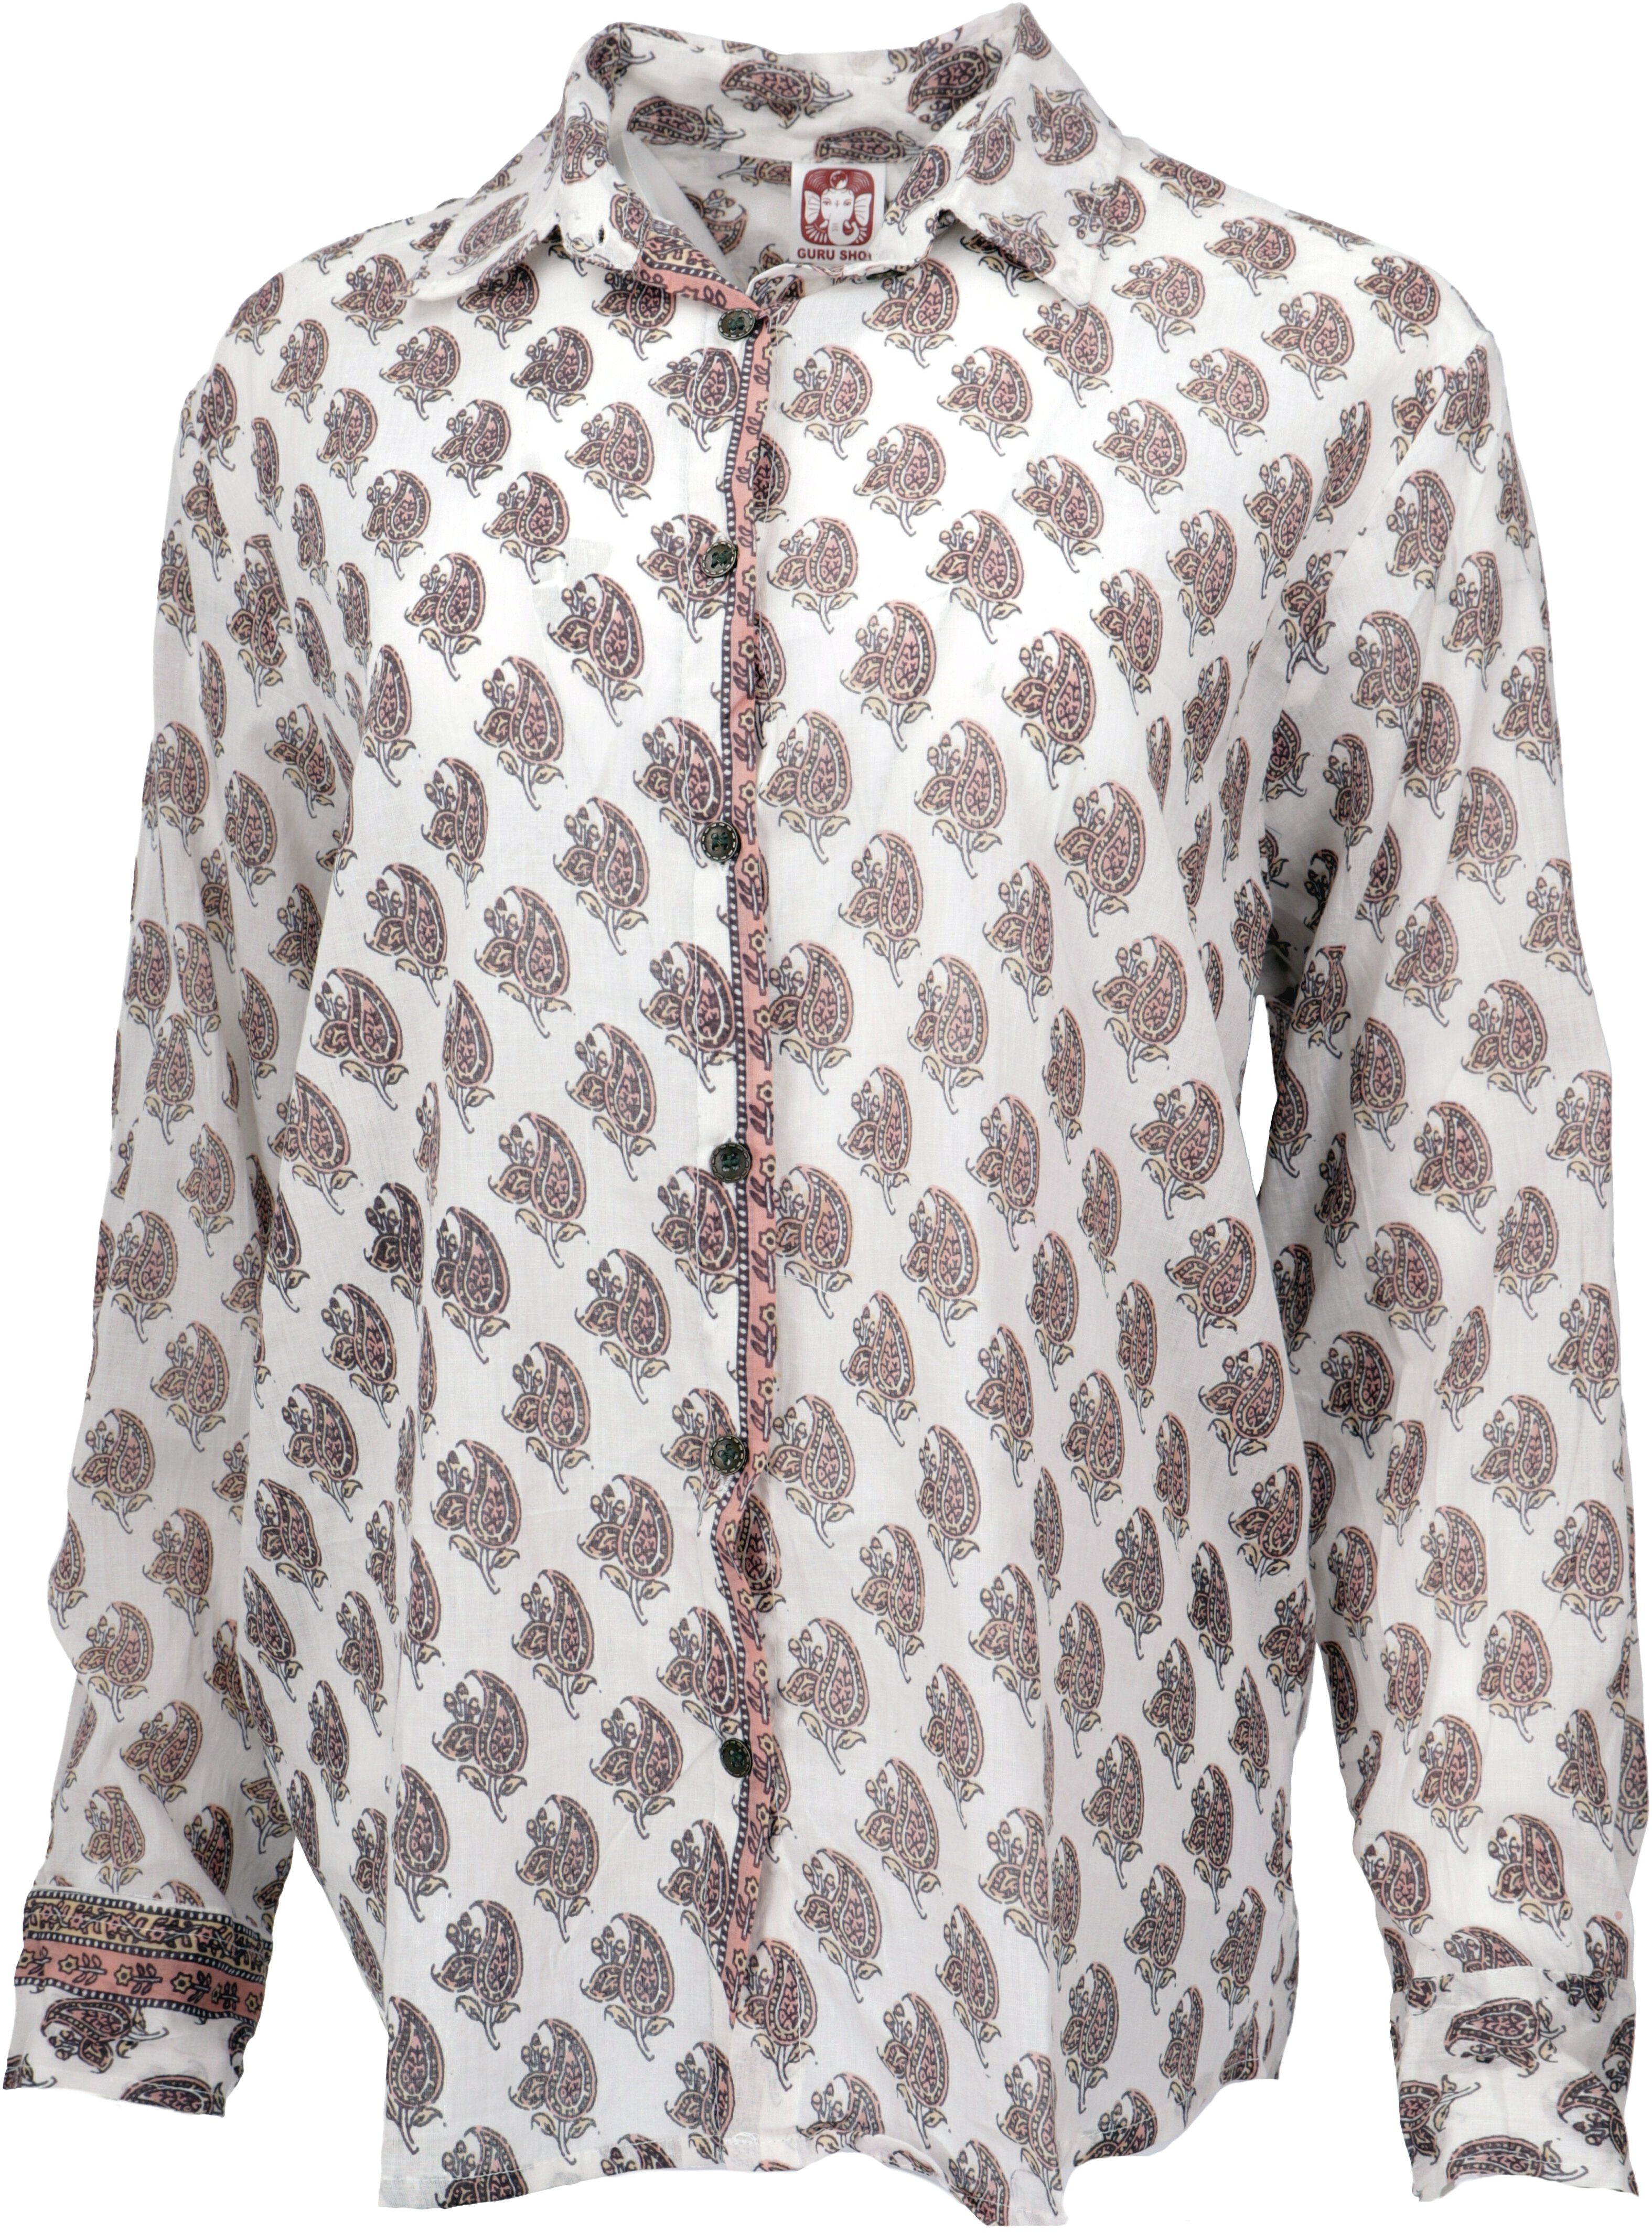 Guru-Shop Longbluse Leichtes Unisex Boho Baumwollhemd, Hemdbluse -.. alternative Bekleidung weiß